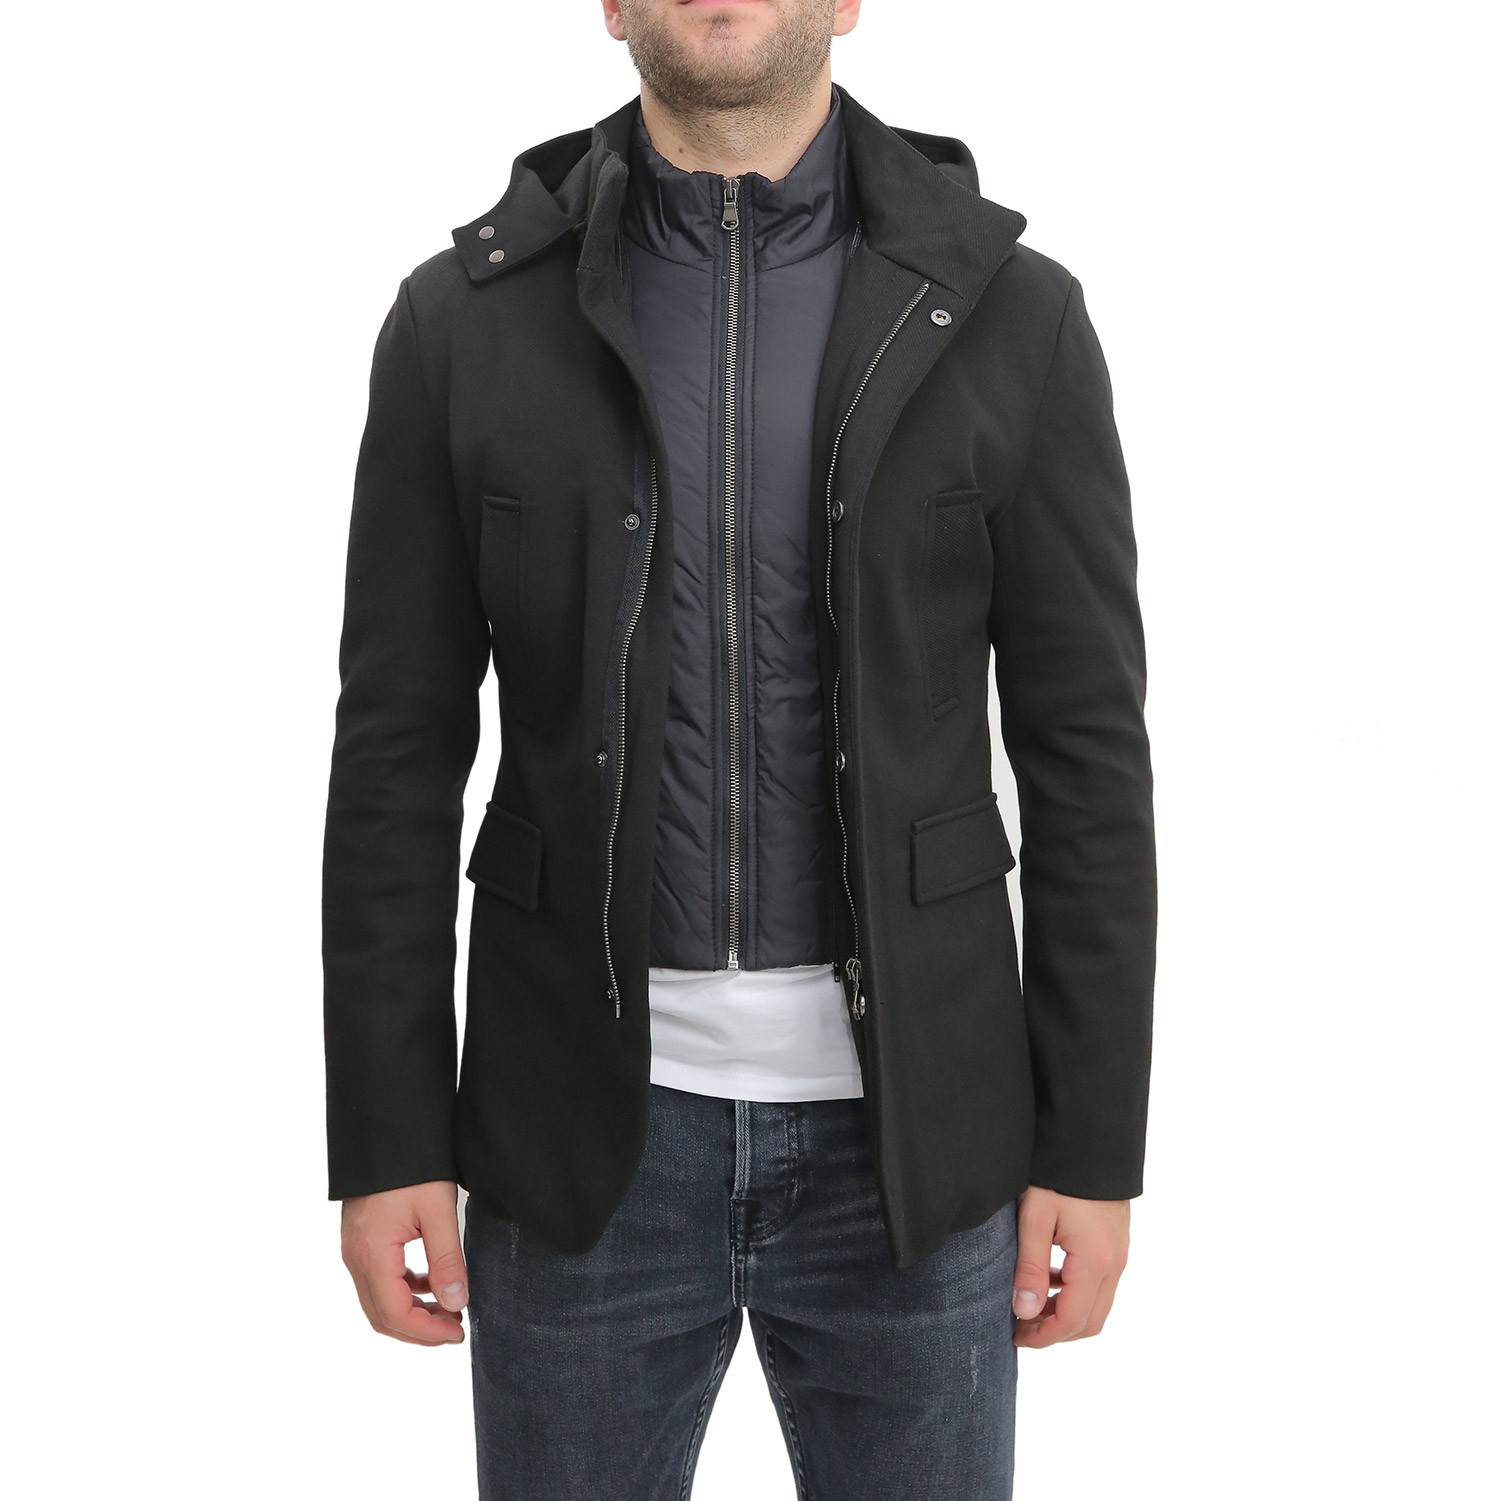 Men Jacket Winter Hooded Black Wool Coat Jacket Slim Coat | eBay